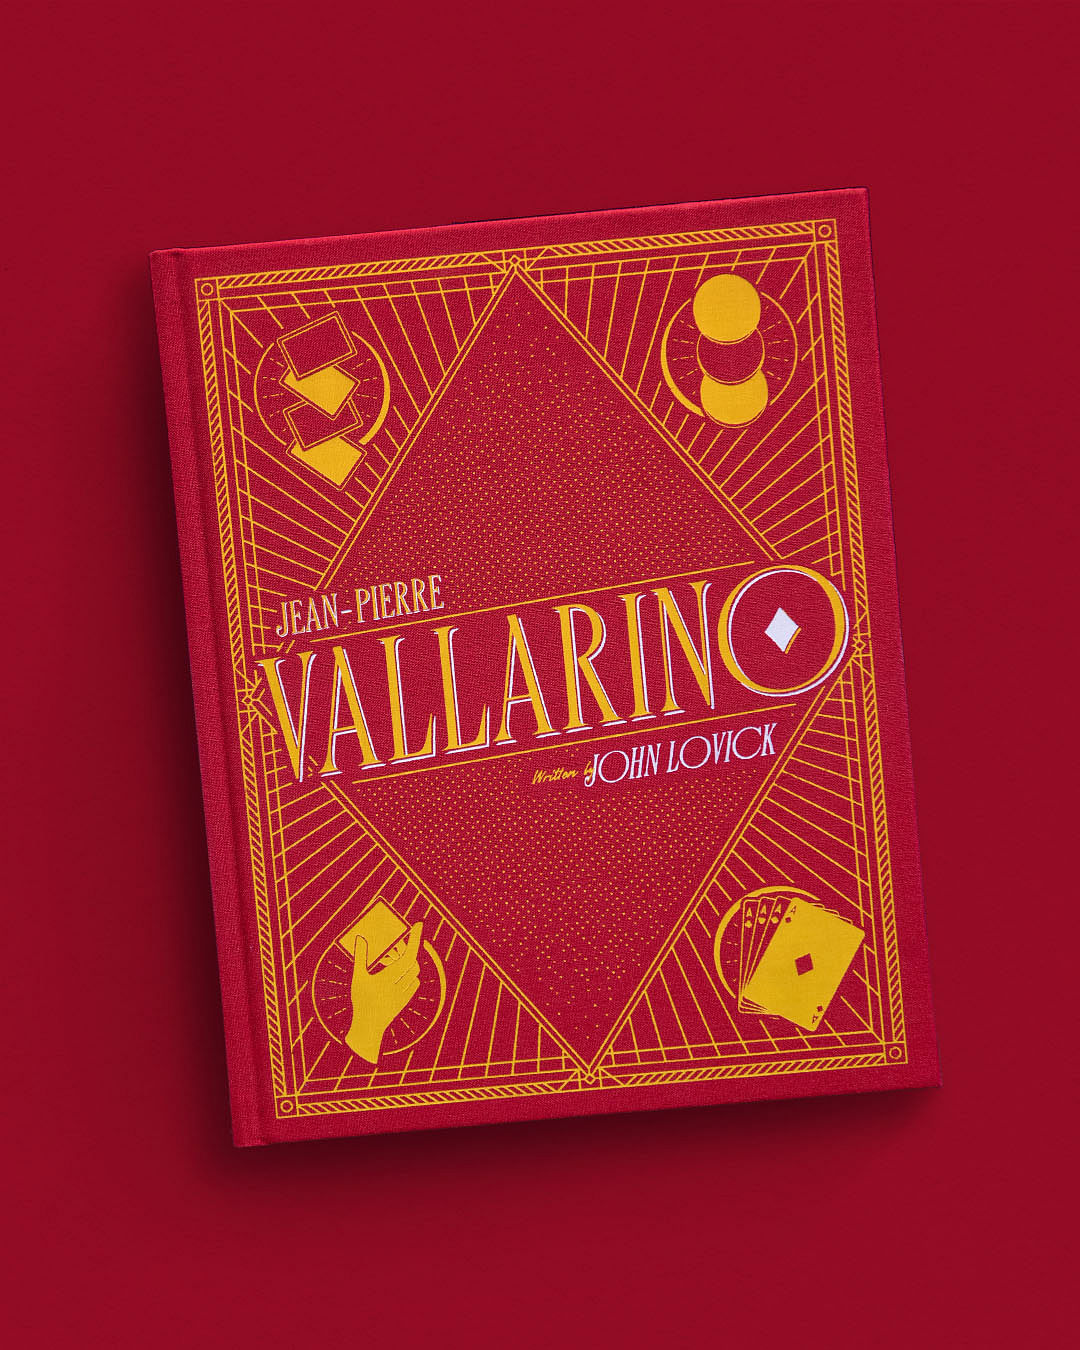 Vallarino card magic book by Vanishing Inc